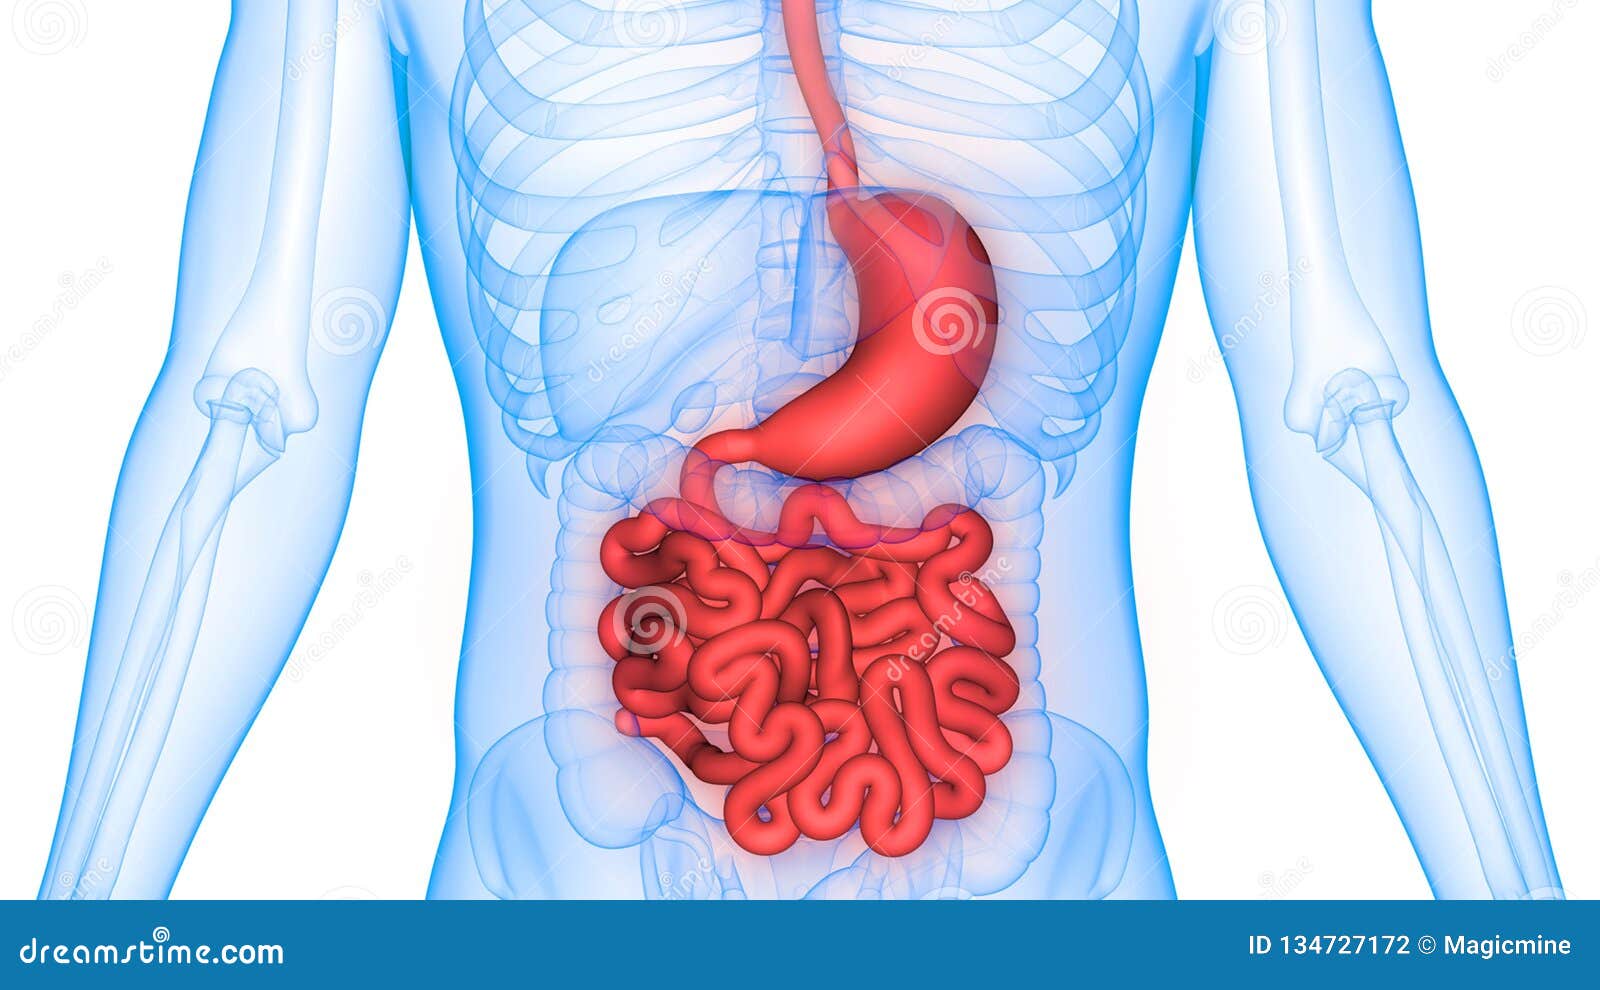 Human Body Organs Digestive System Stomach With Large Intestine Anatomy Stock Illustration ...